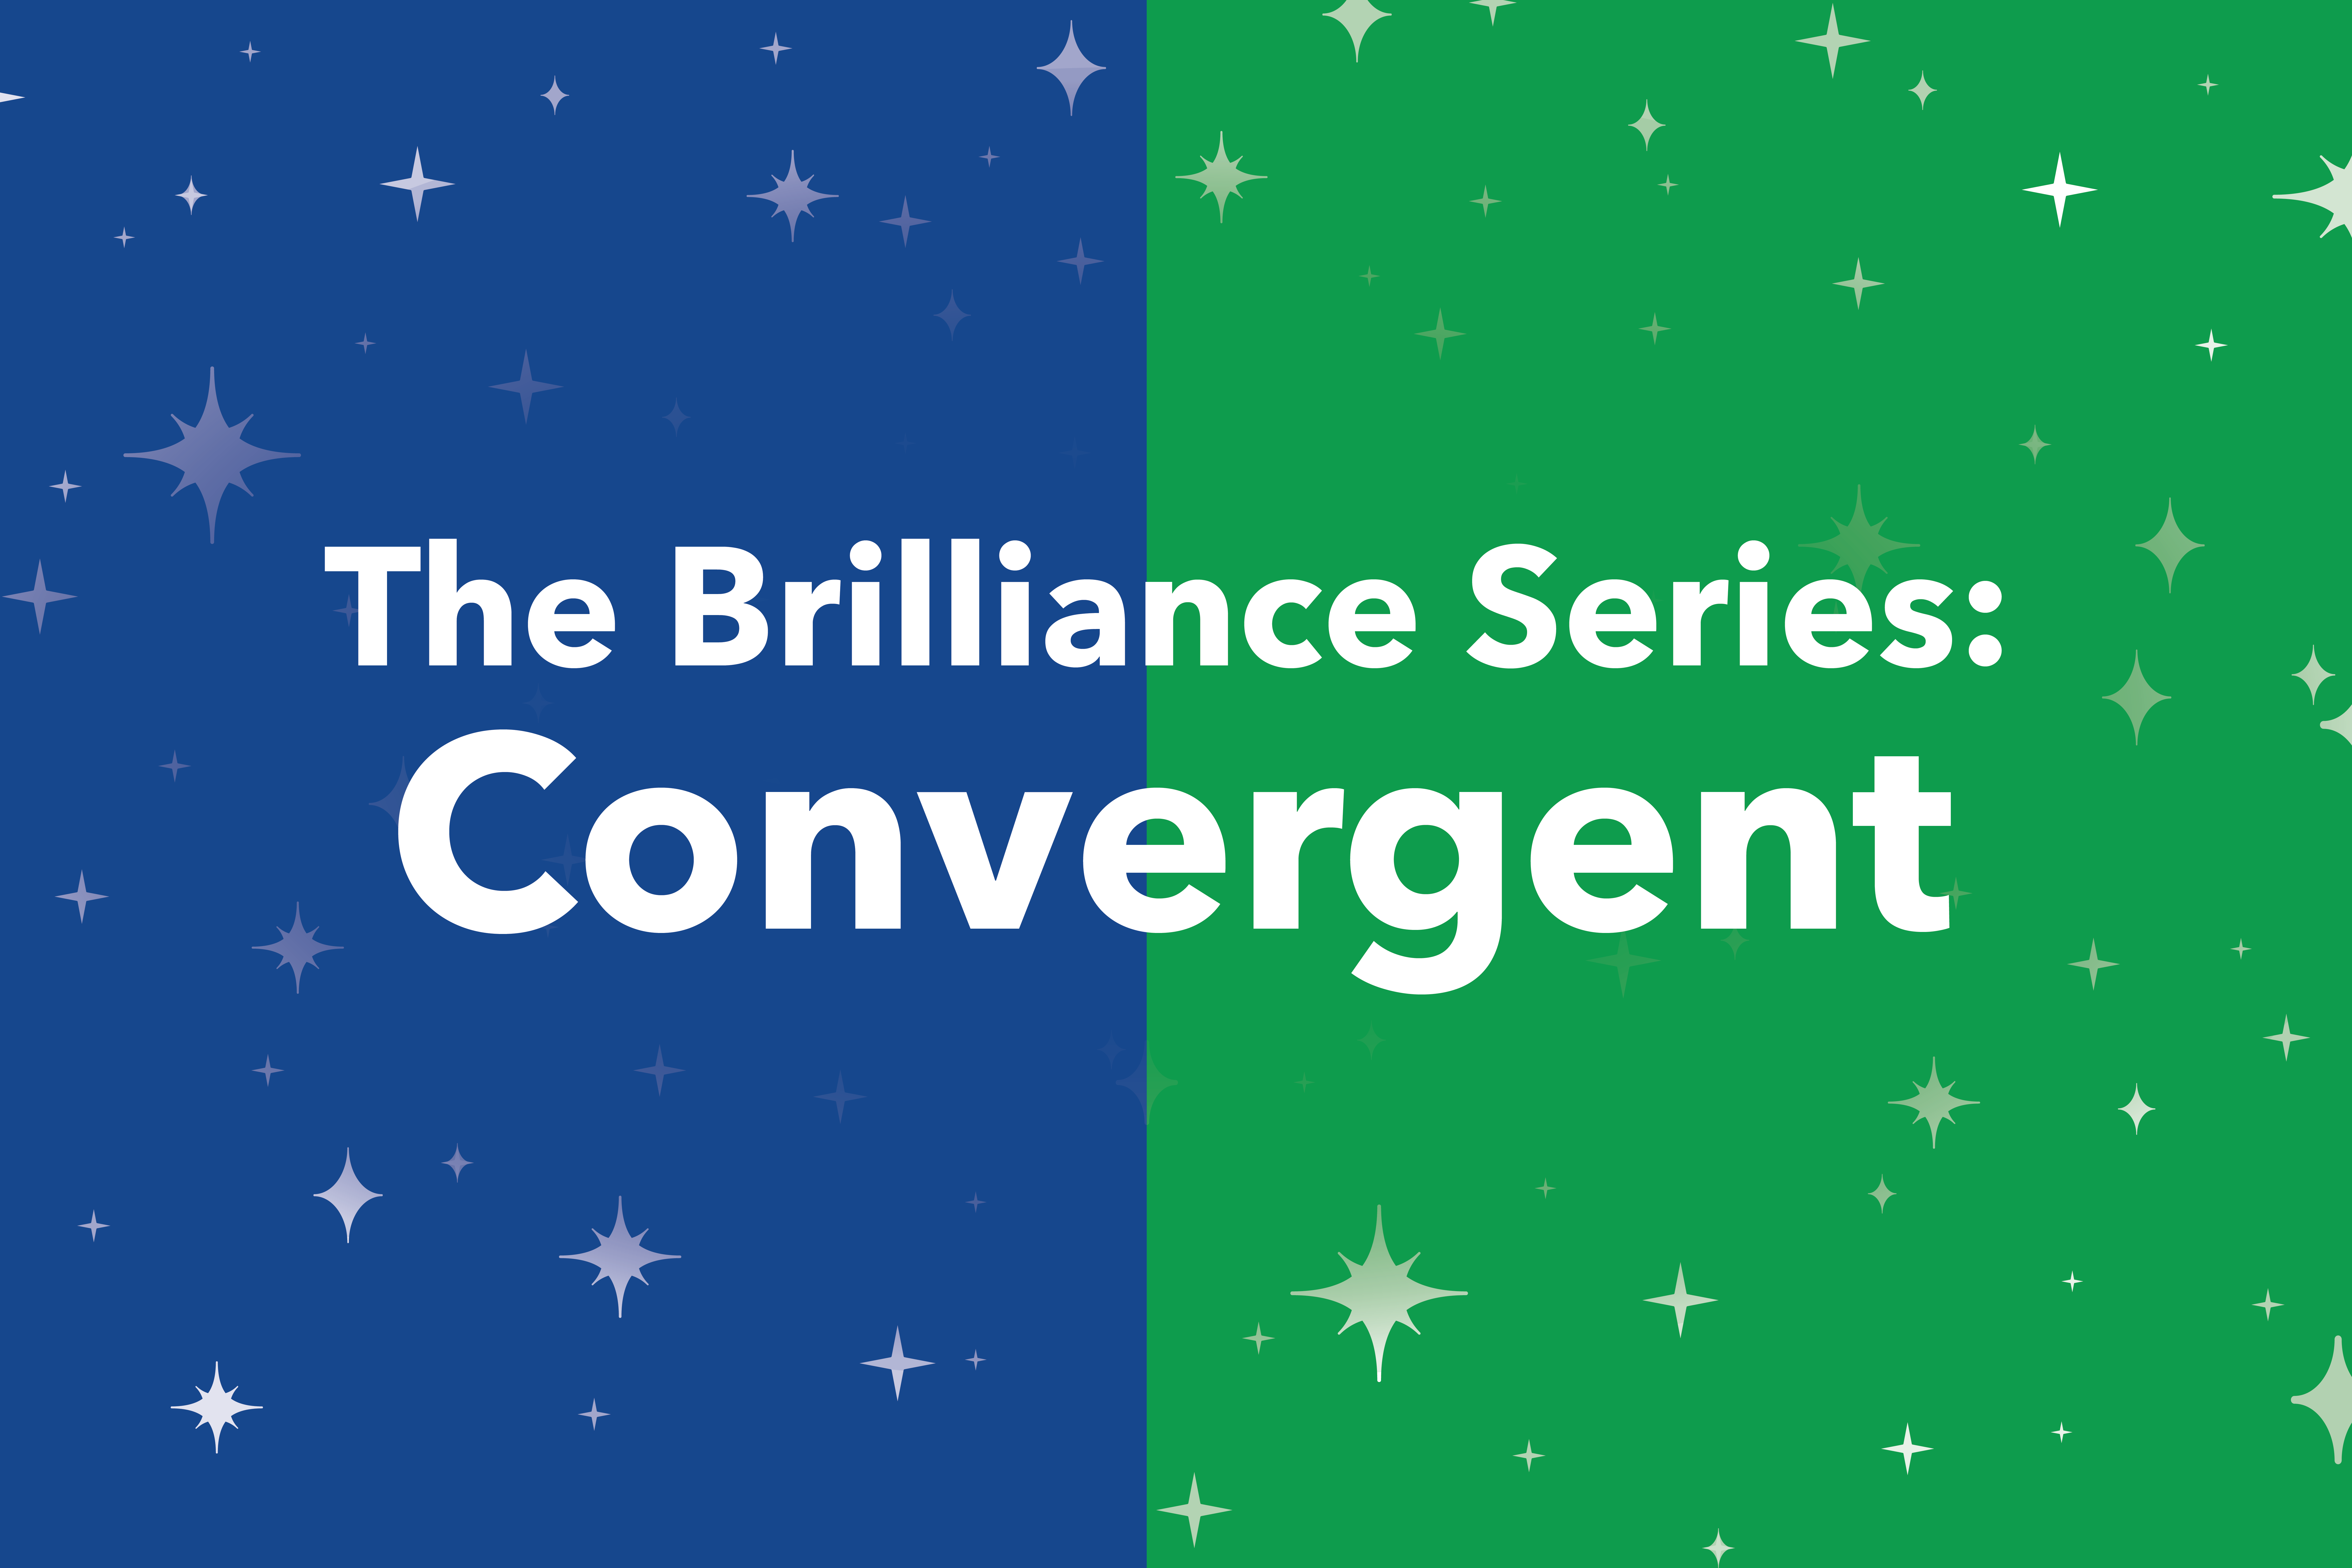 The Brilliance Series: Convergent